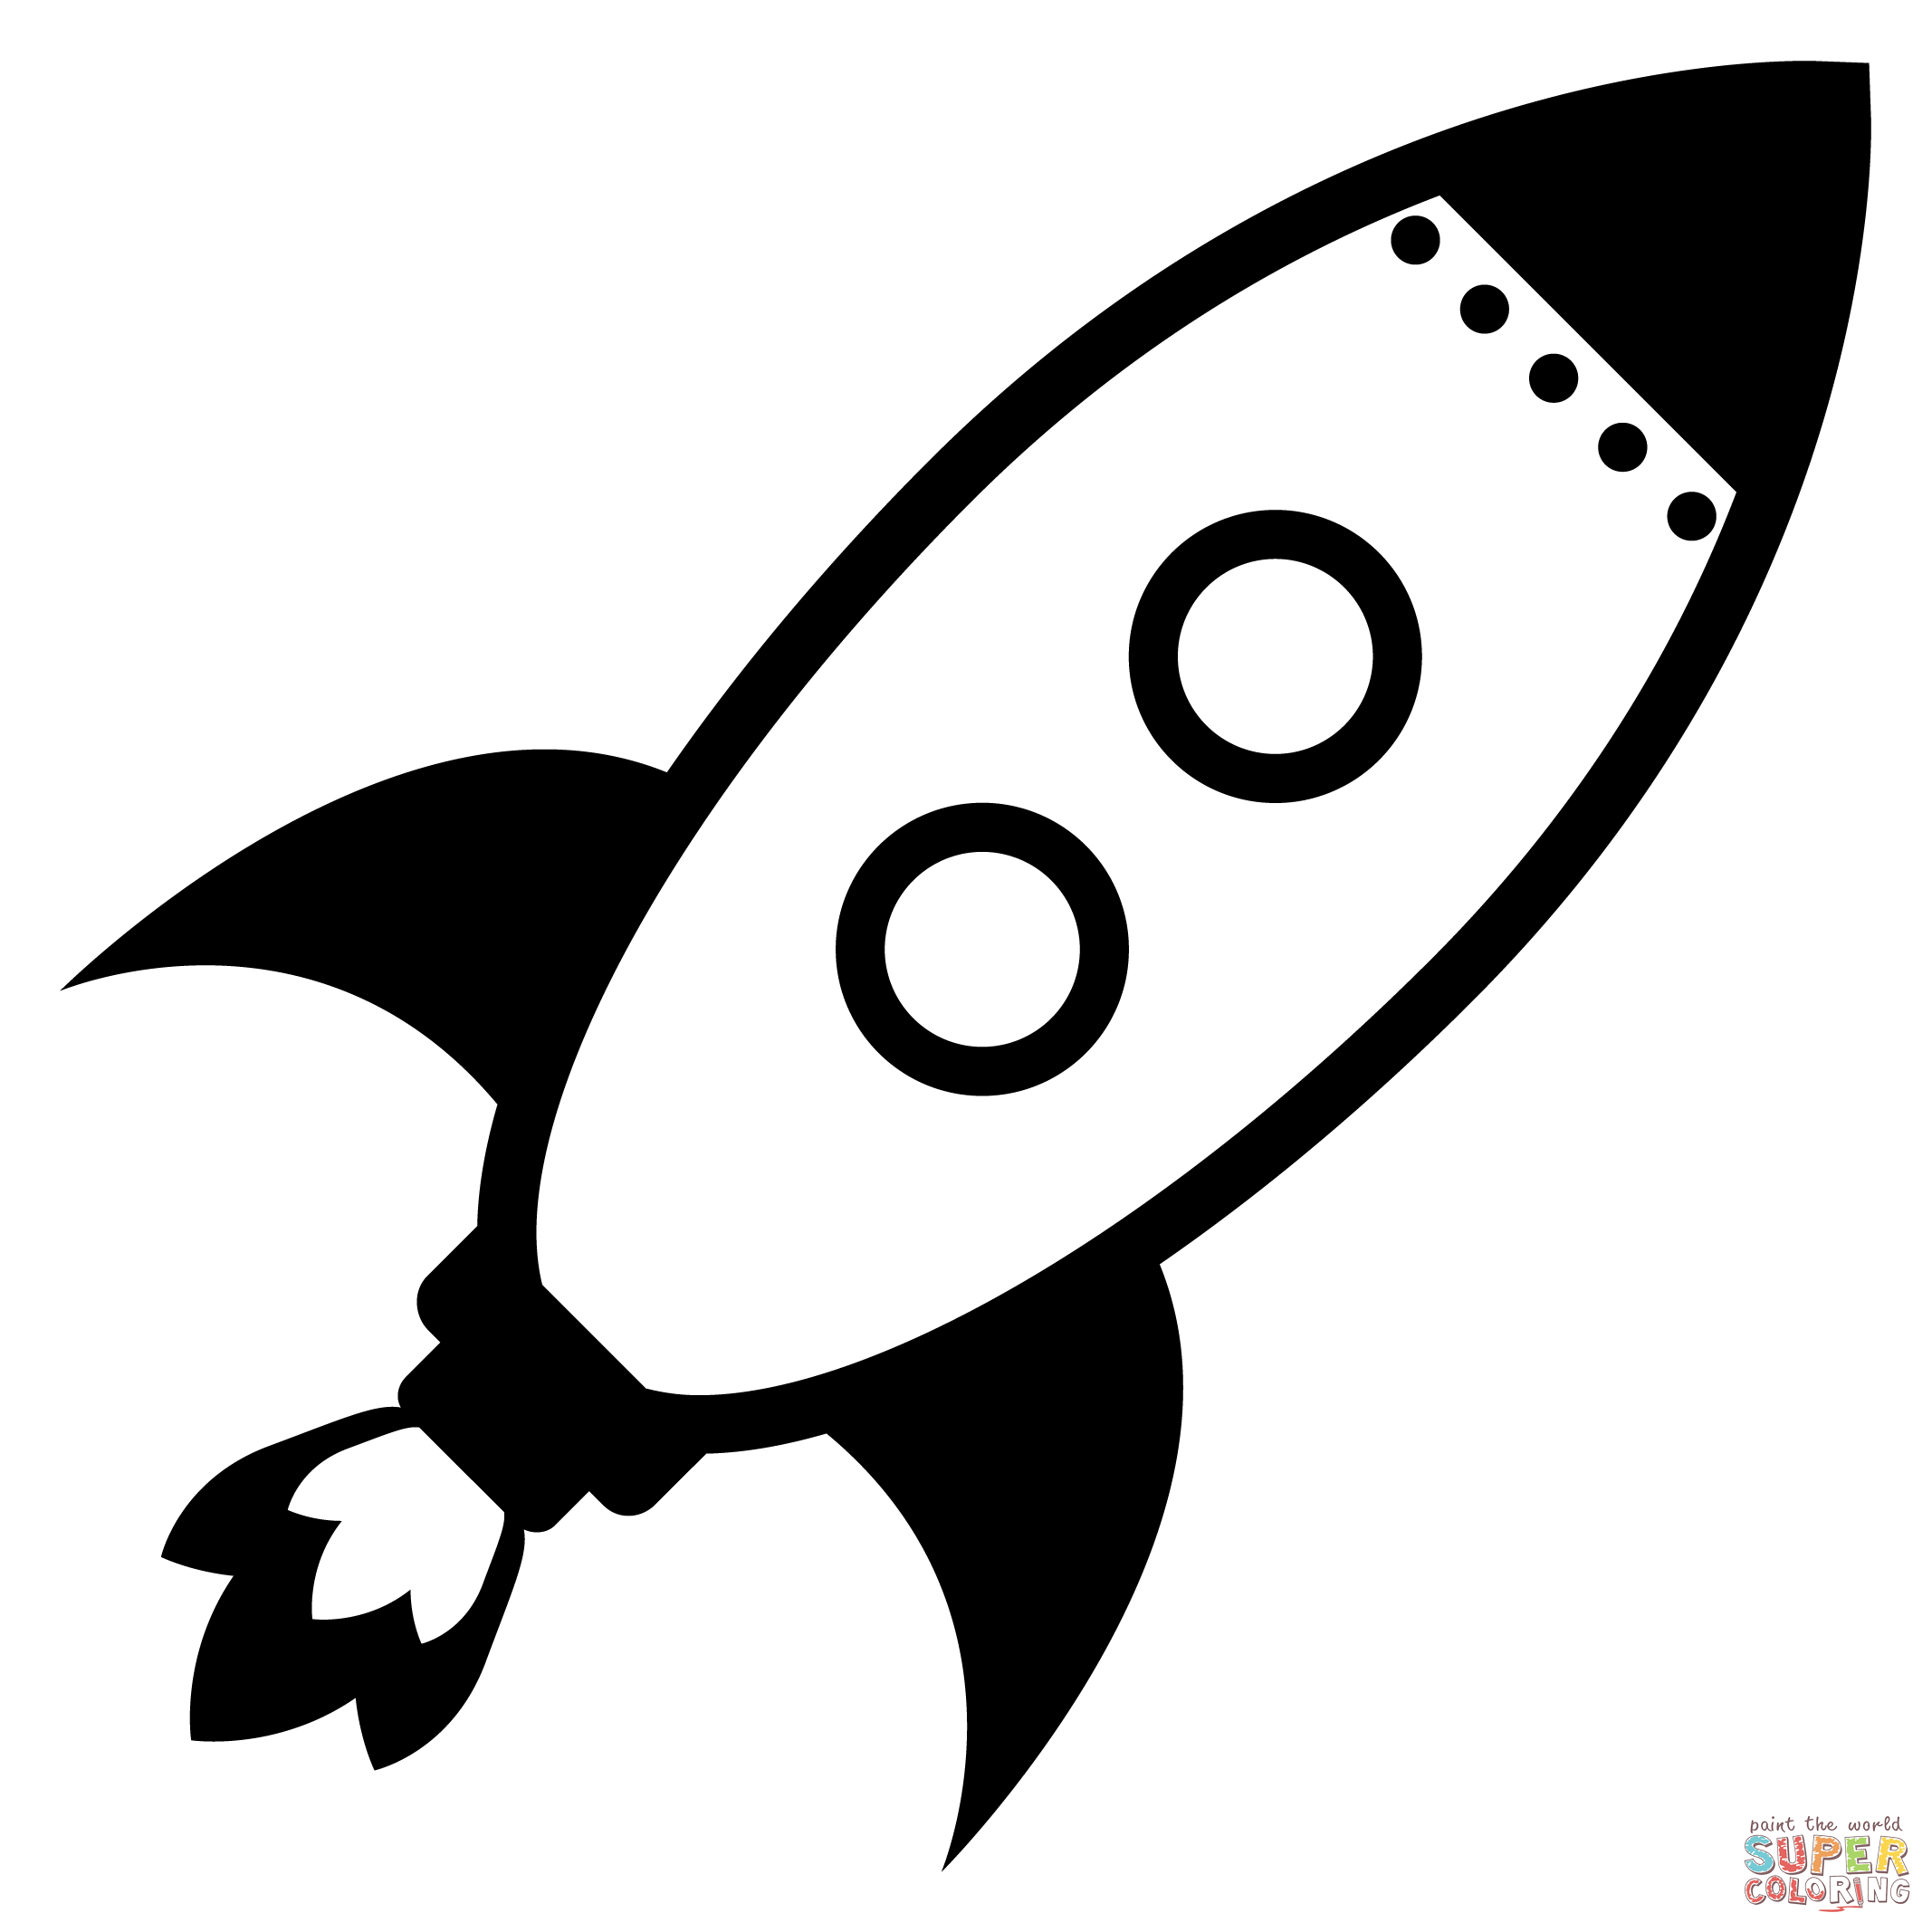 Printable rocket emoji